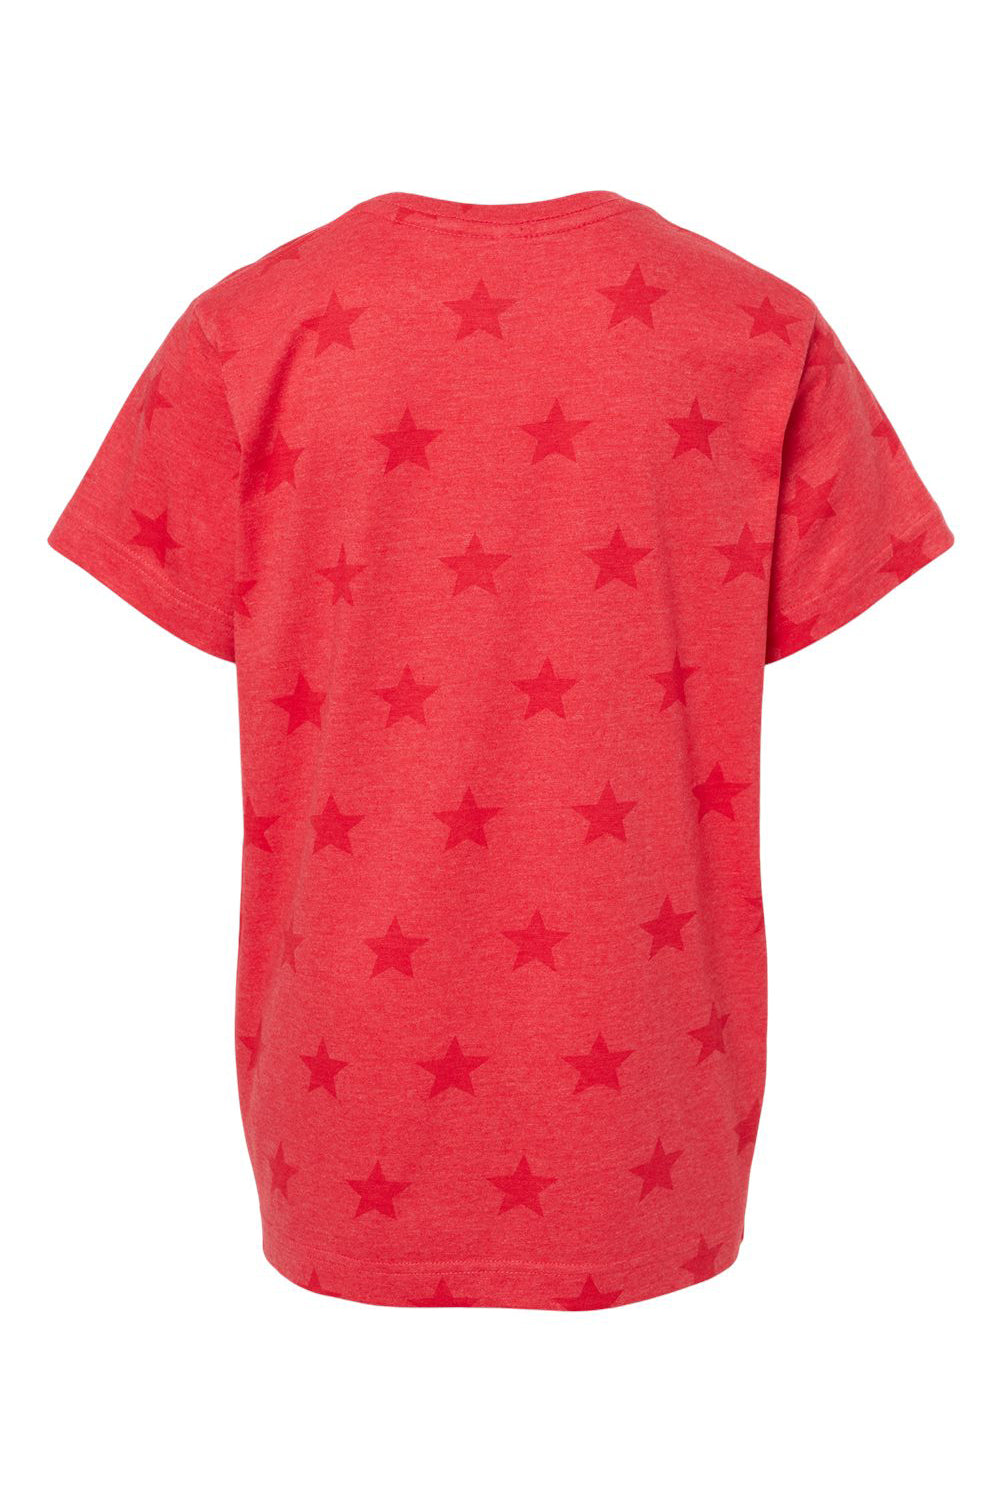 Code Five 2229 Youth Star Print Short Sleeve Crewneck T-Shirt Red Flat Back